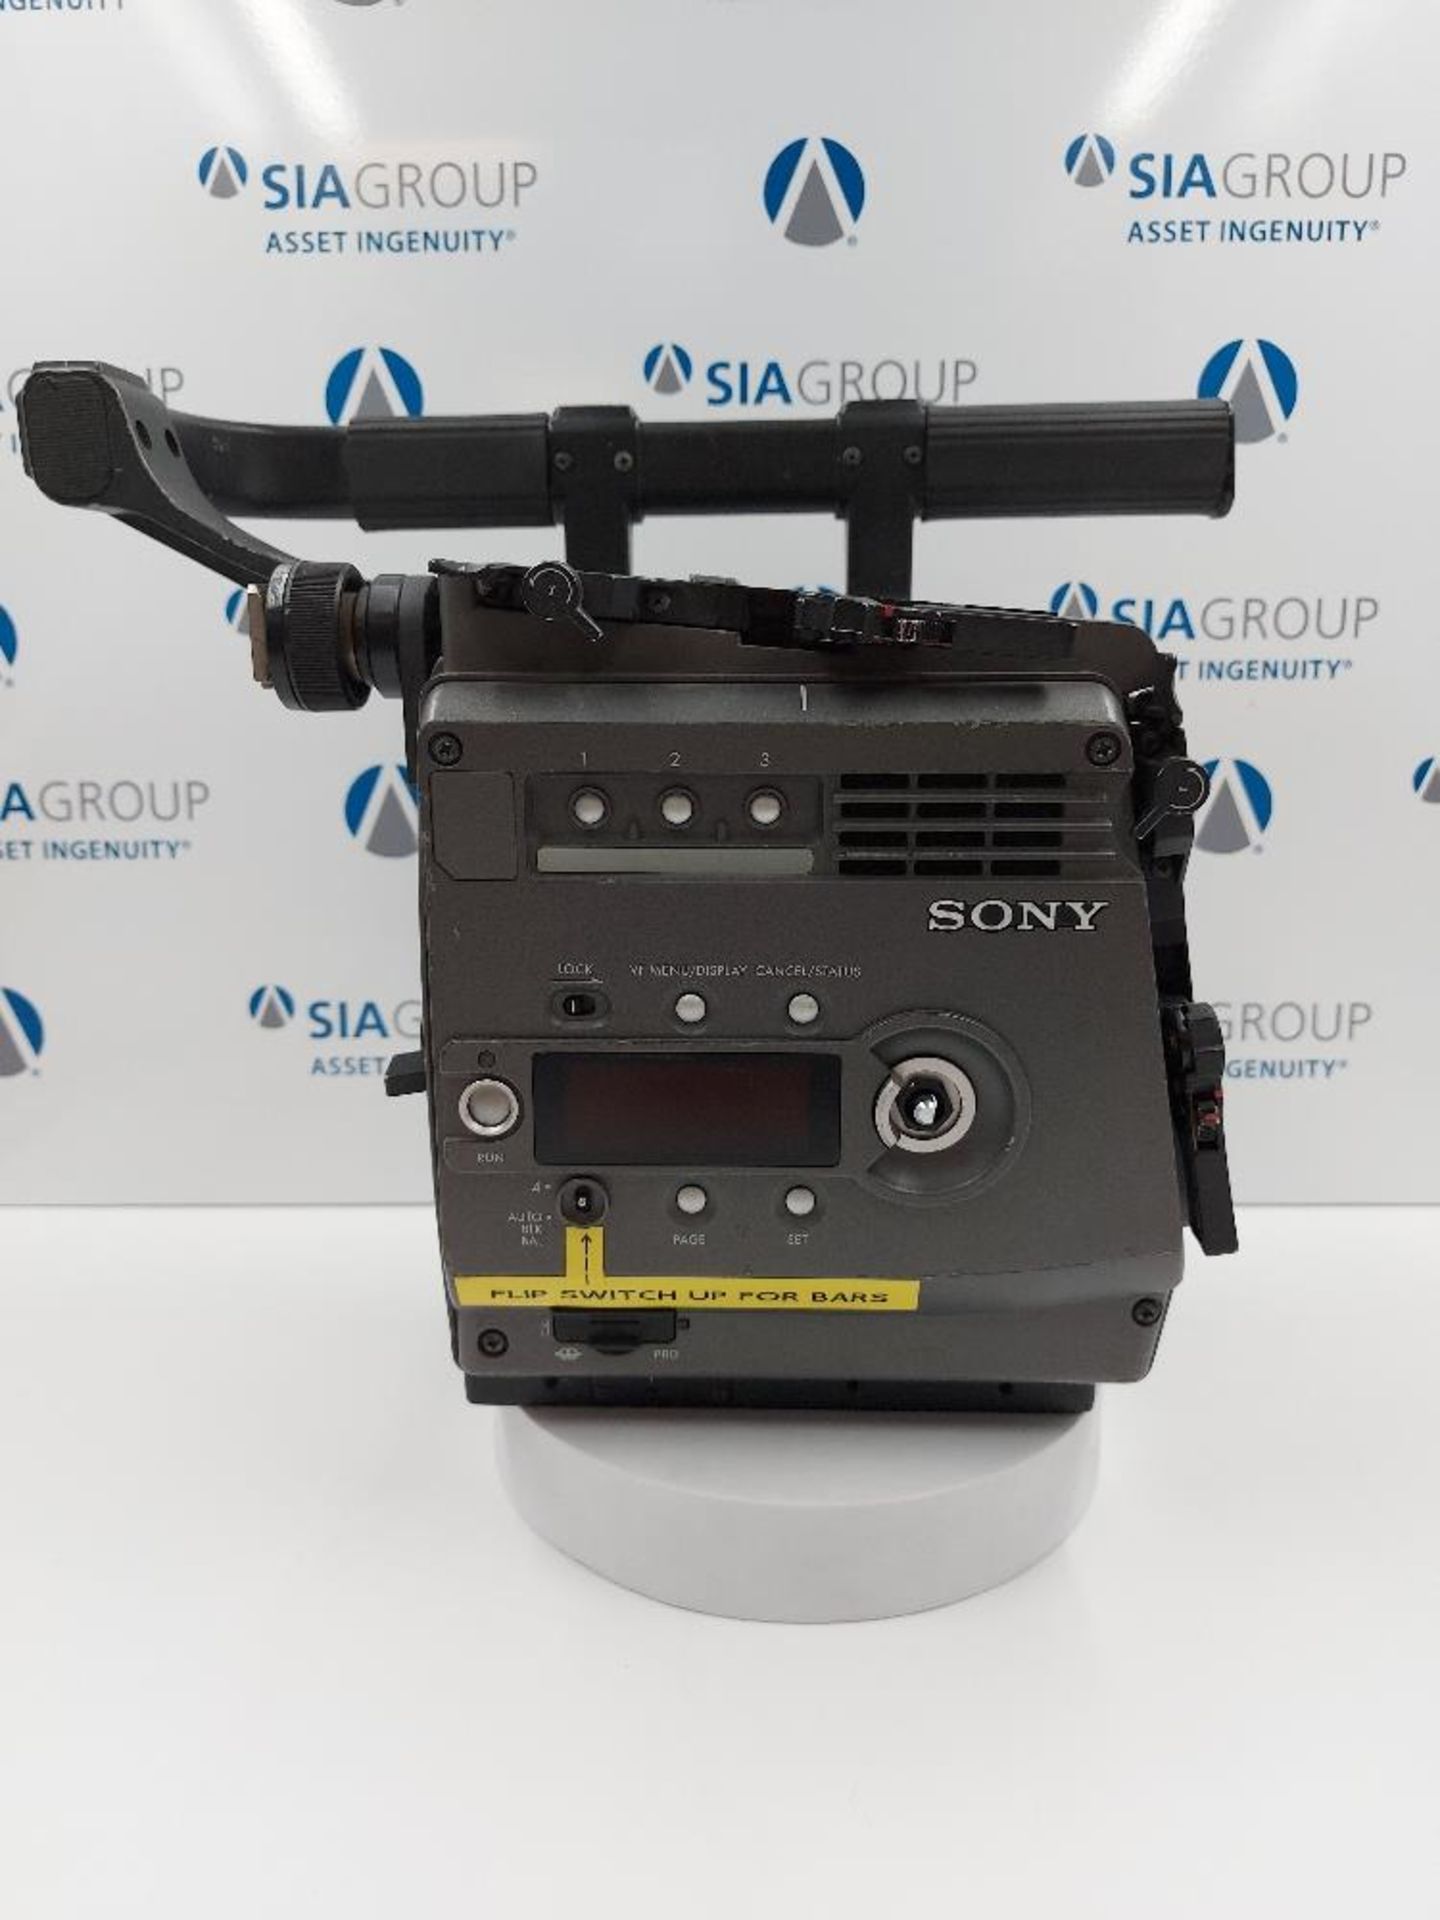 Sony F35 CineAlta HD Digital Cinematography Camera With Super 35mm Sensor - Image 2 of 8